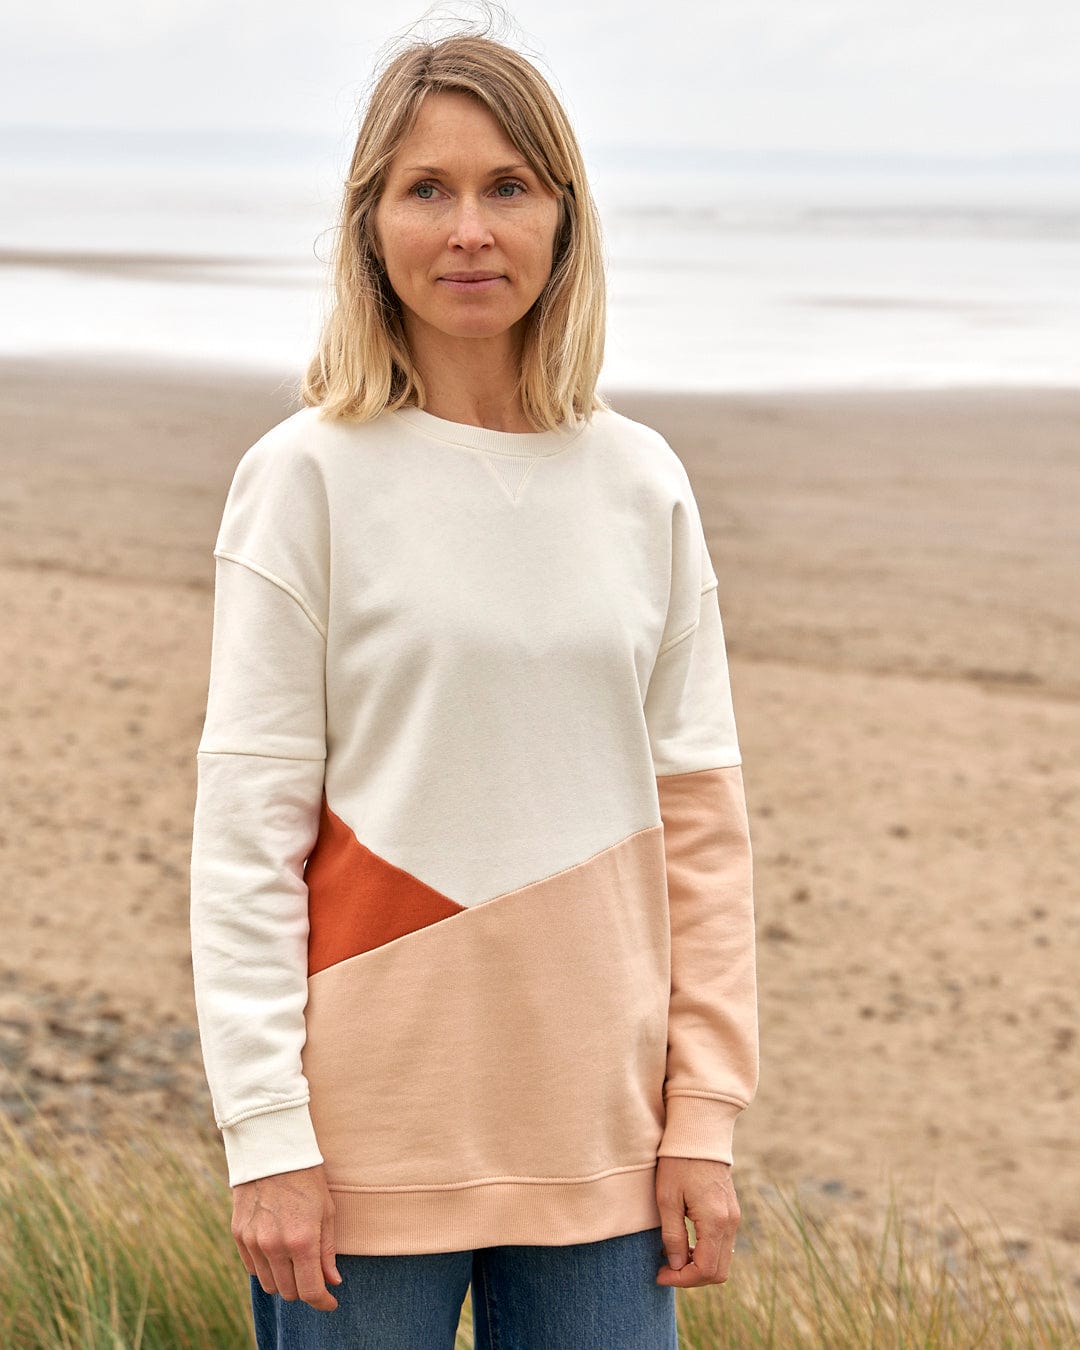 A woman standing on a beach wearing the Sofie - Womens Boyfriend Fit Sweat - Light Orange/Cream sweater by Saltrock.